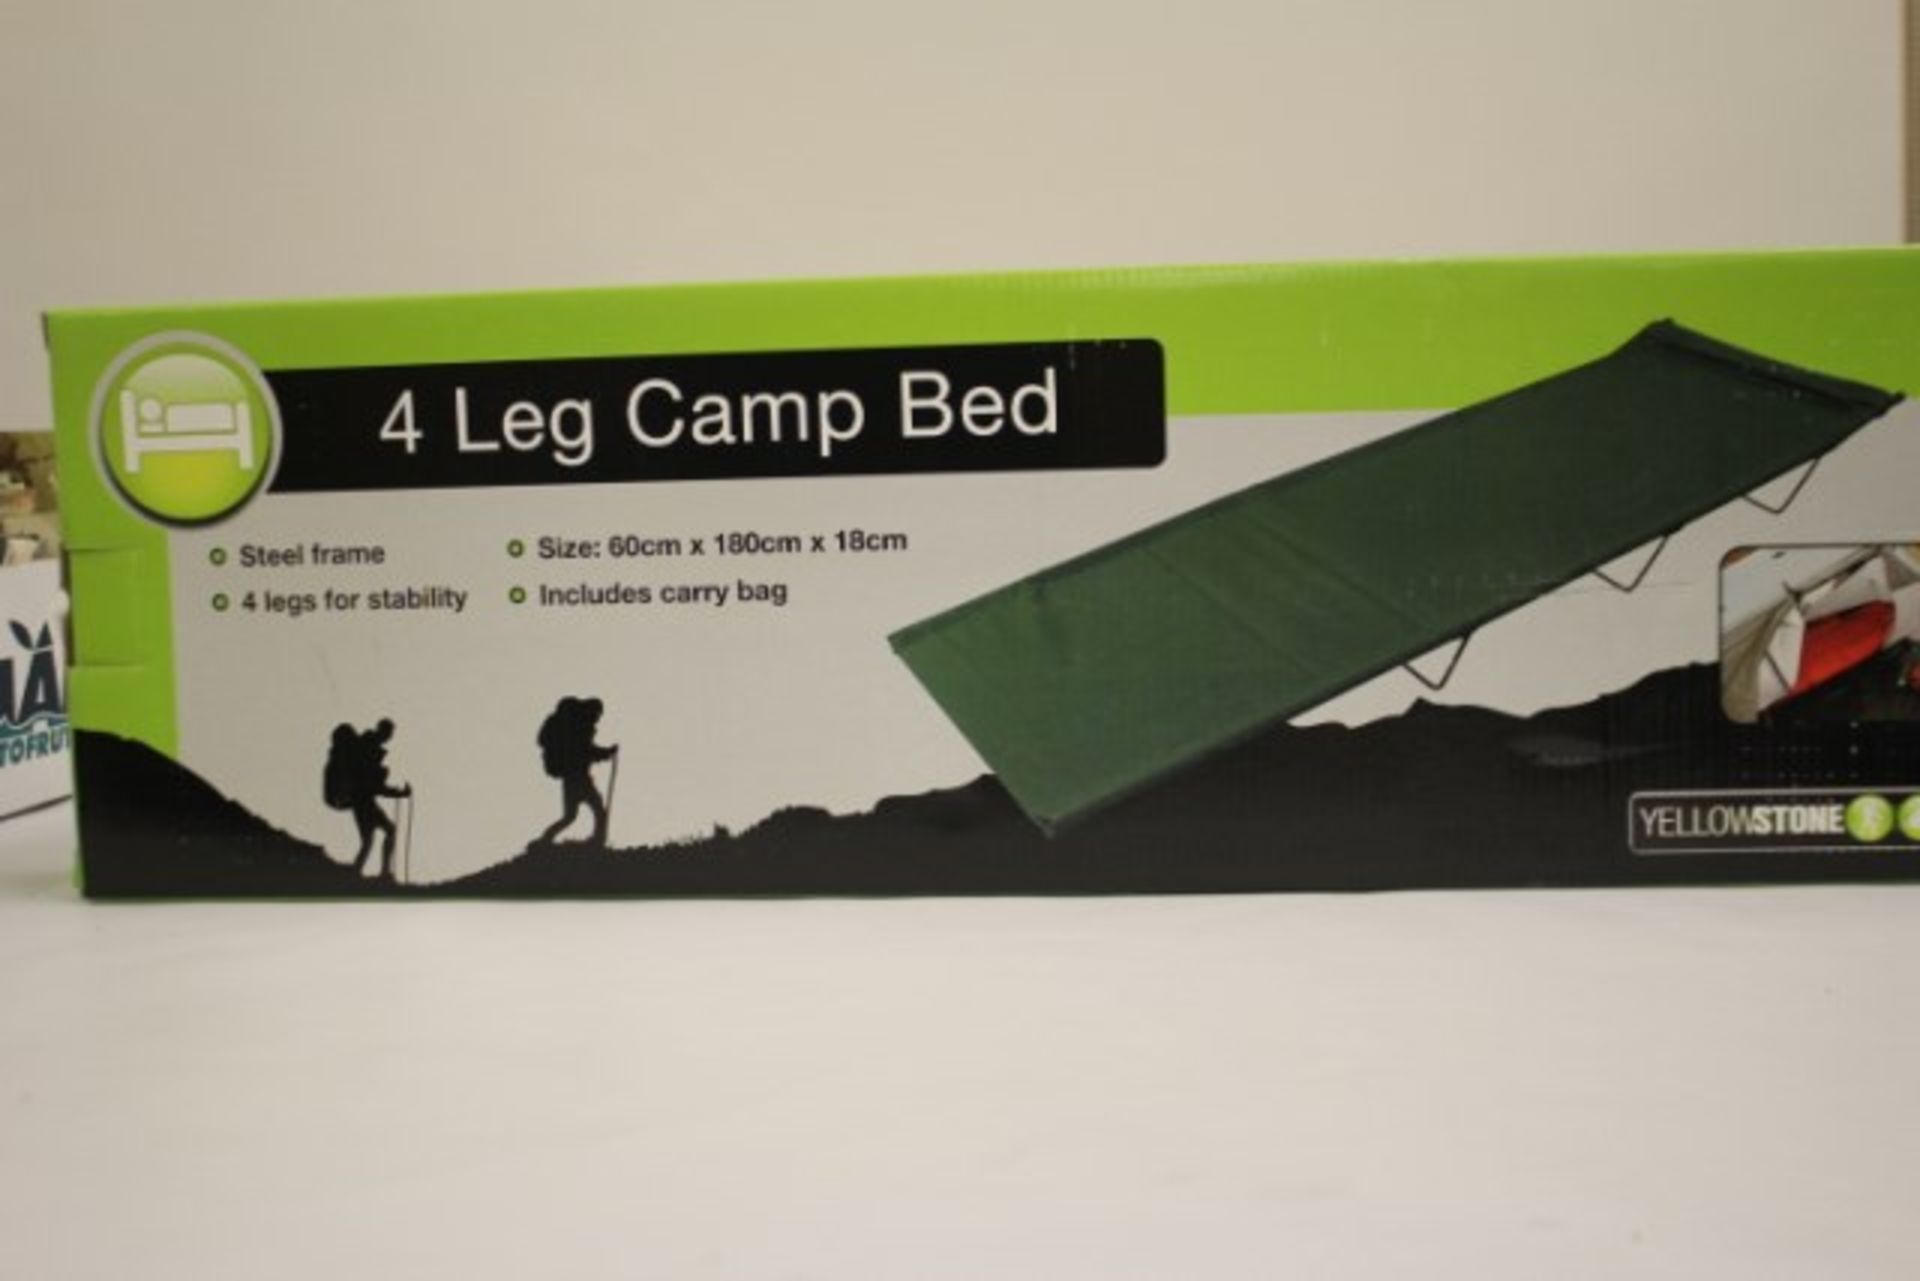 V Steel Frame Four Leg Camp Bed (60cm x 180cm x 18cm) Includes Carry Bag RRP £40.00 - Image 2 of 2